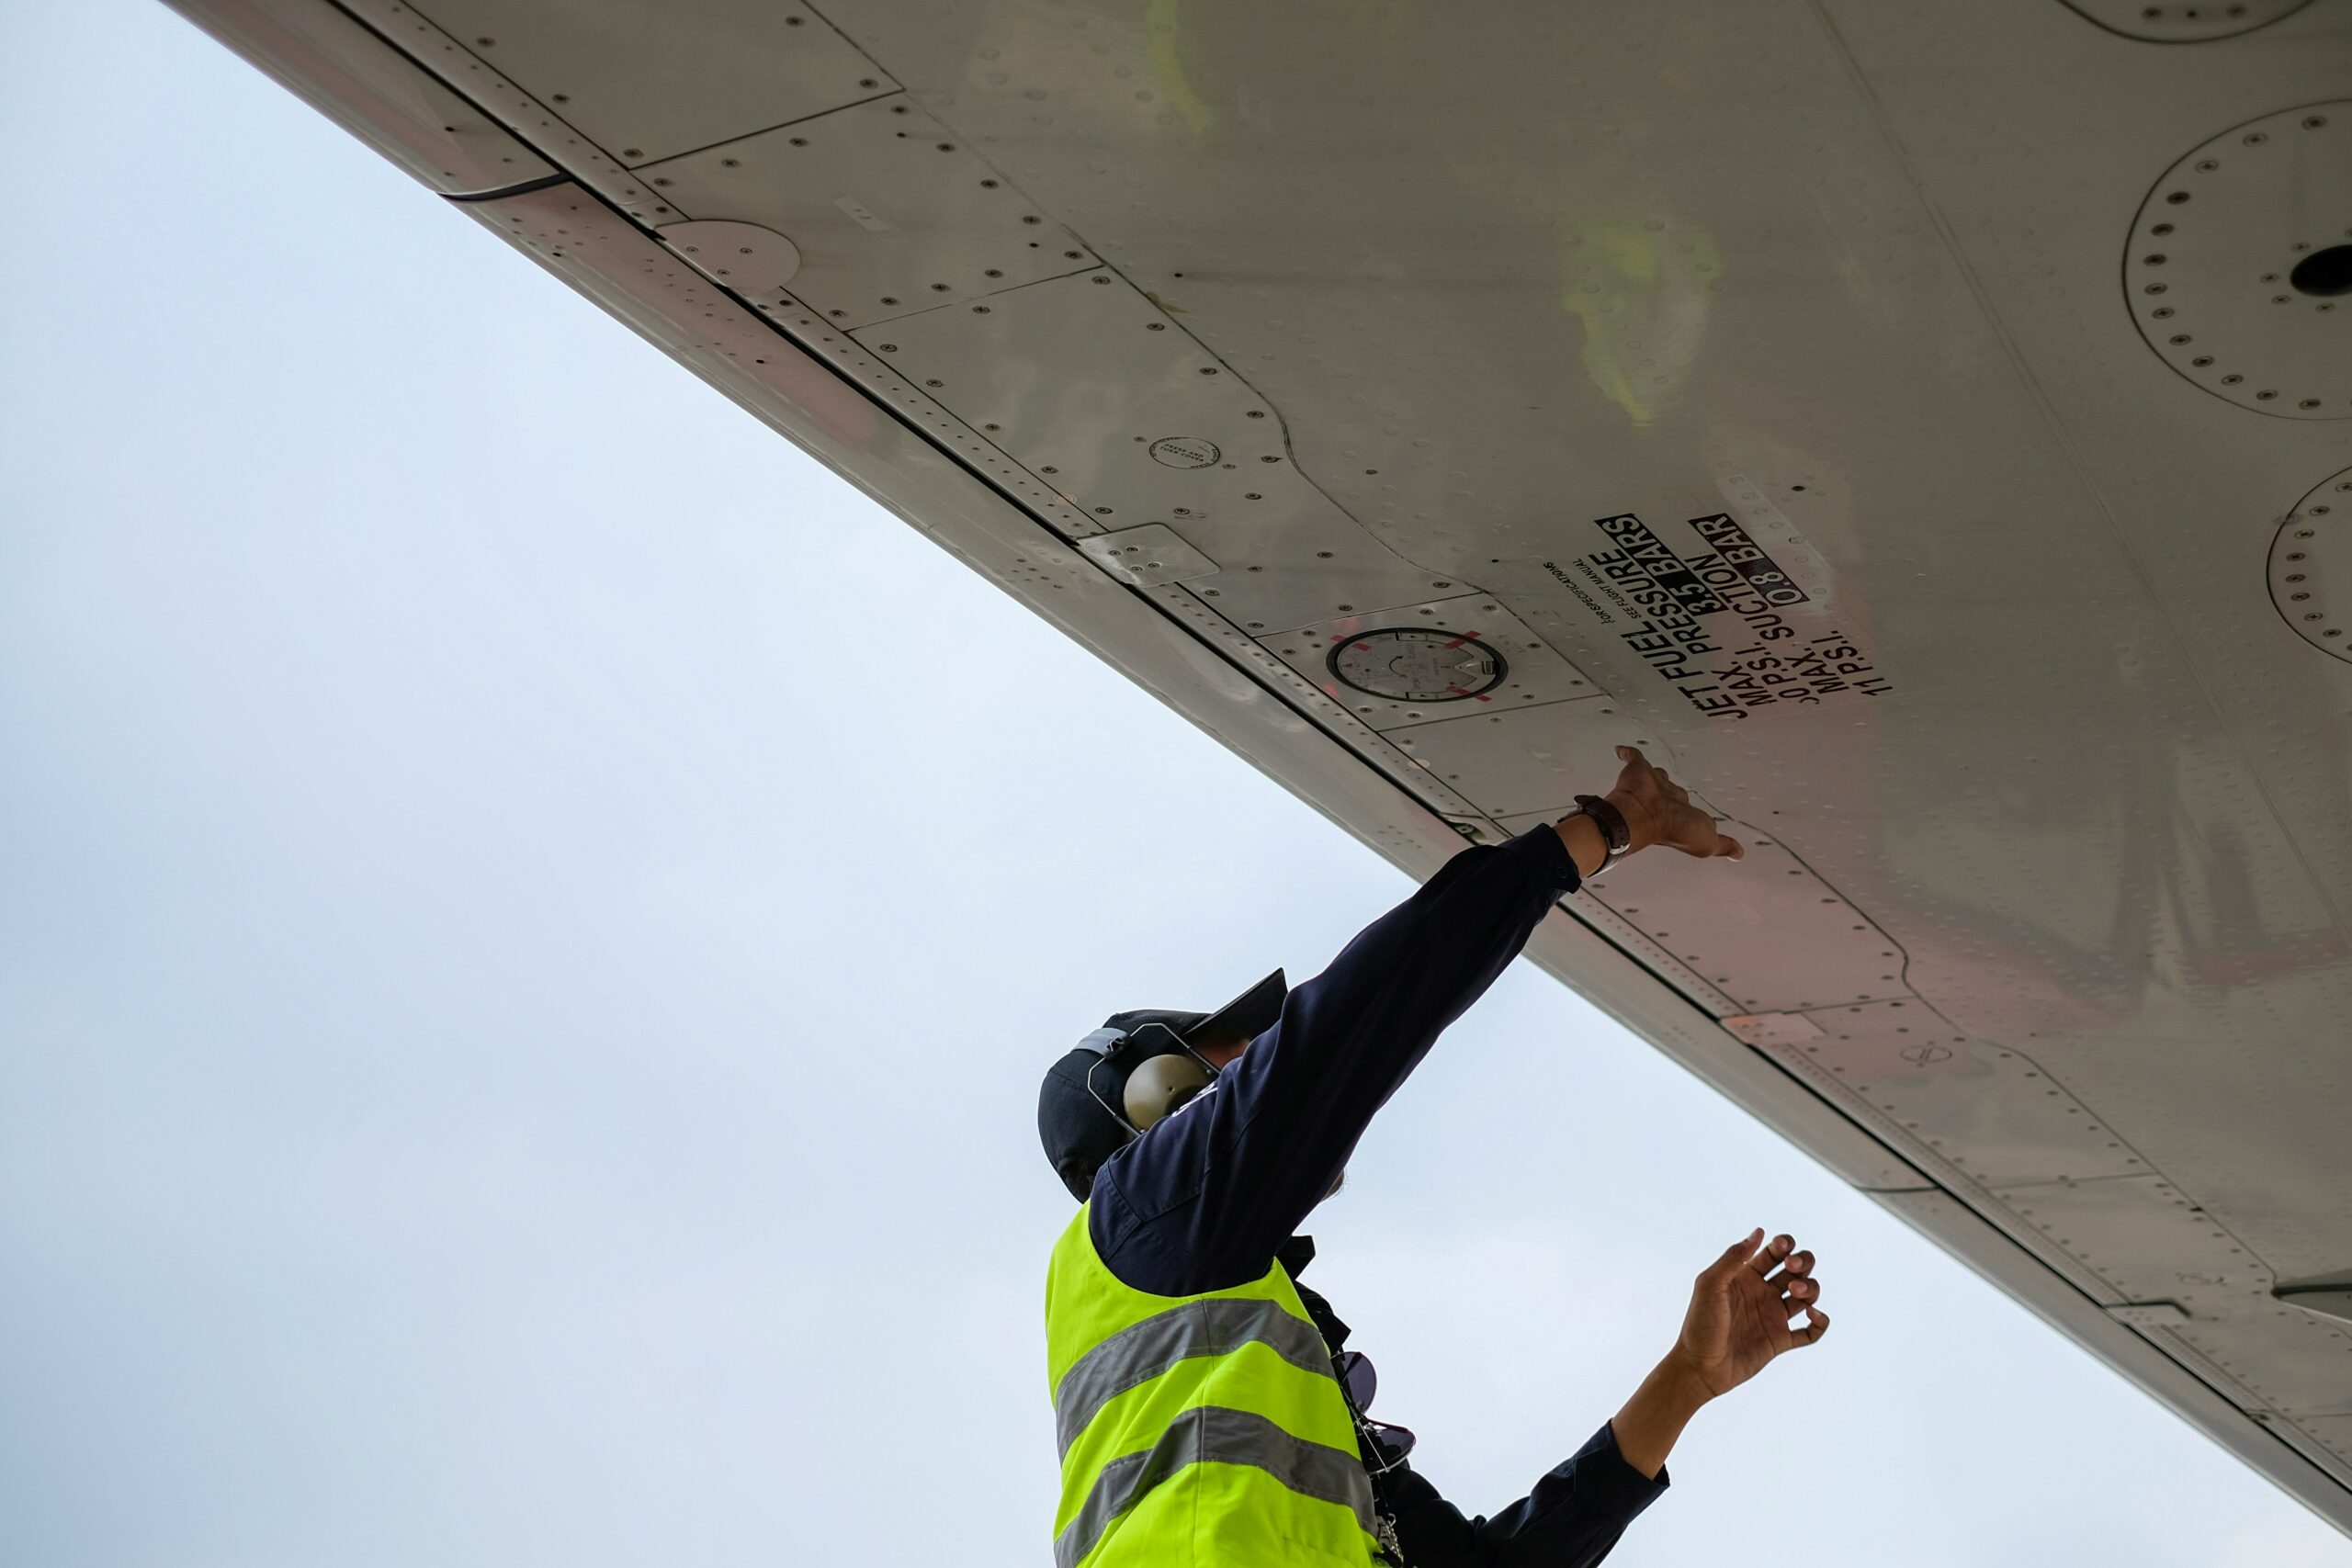 aircraft maintenance